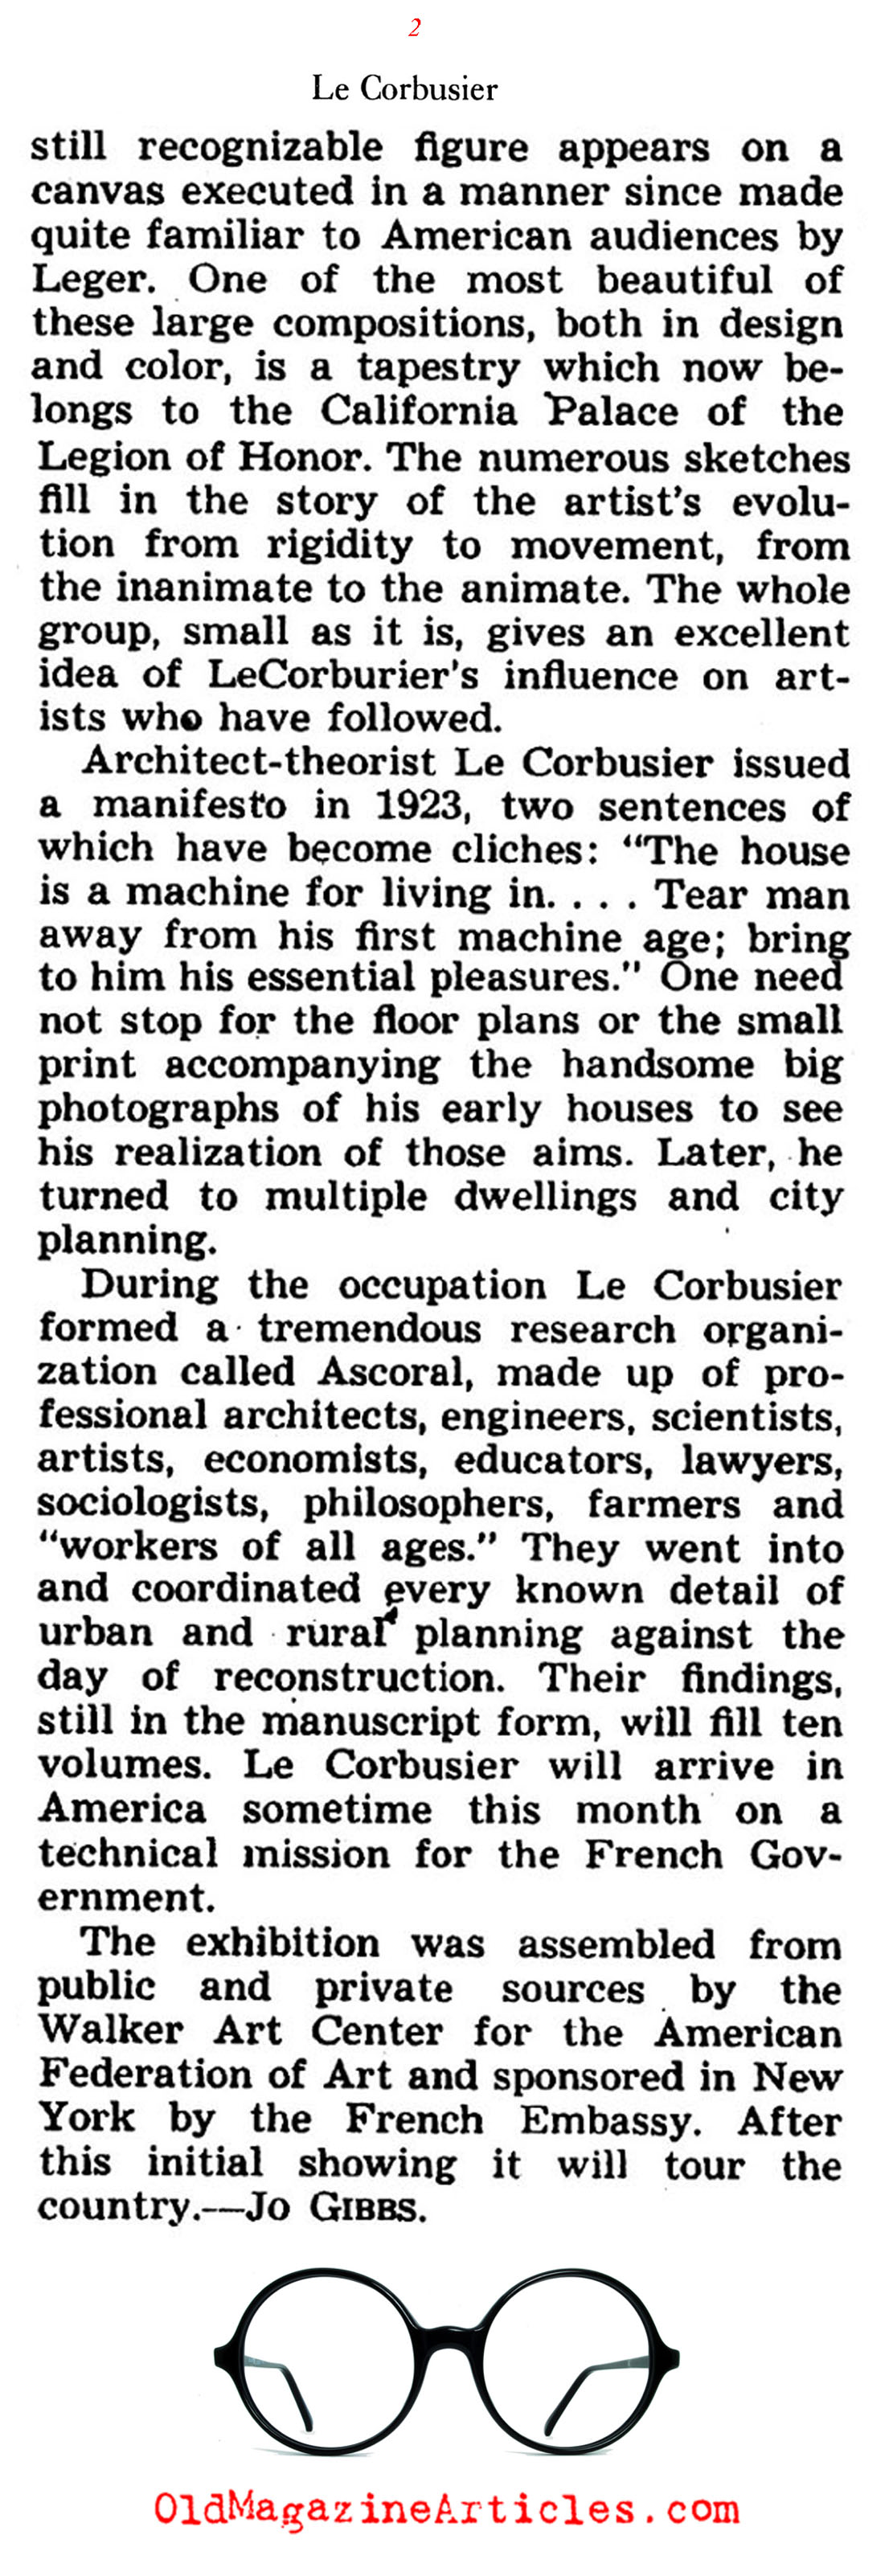 New York Exhibit for Le Corbusier (Art Digest Magazine, 1946)